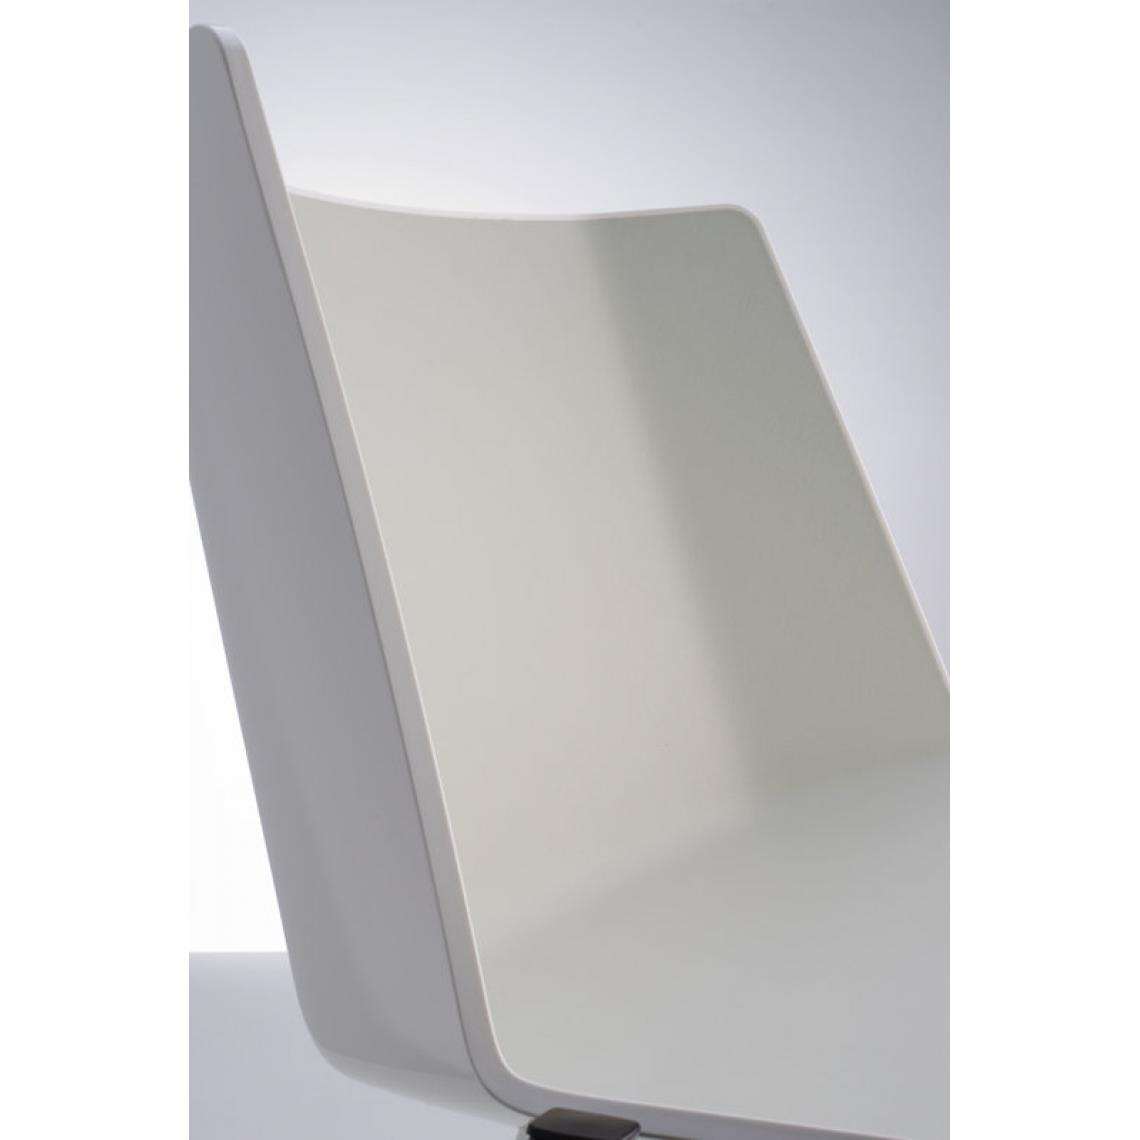 Mdf Italia - Chaise AÏKU - blanc brillant/gris clair - blanc - 4 pieds ronds - Chaises